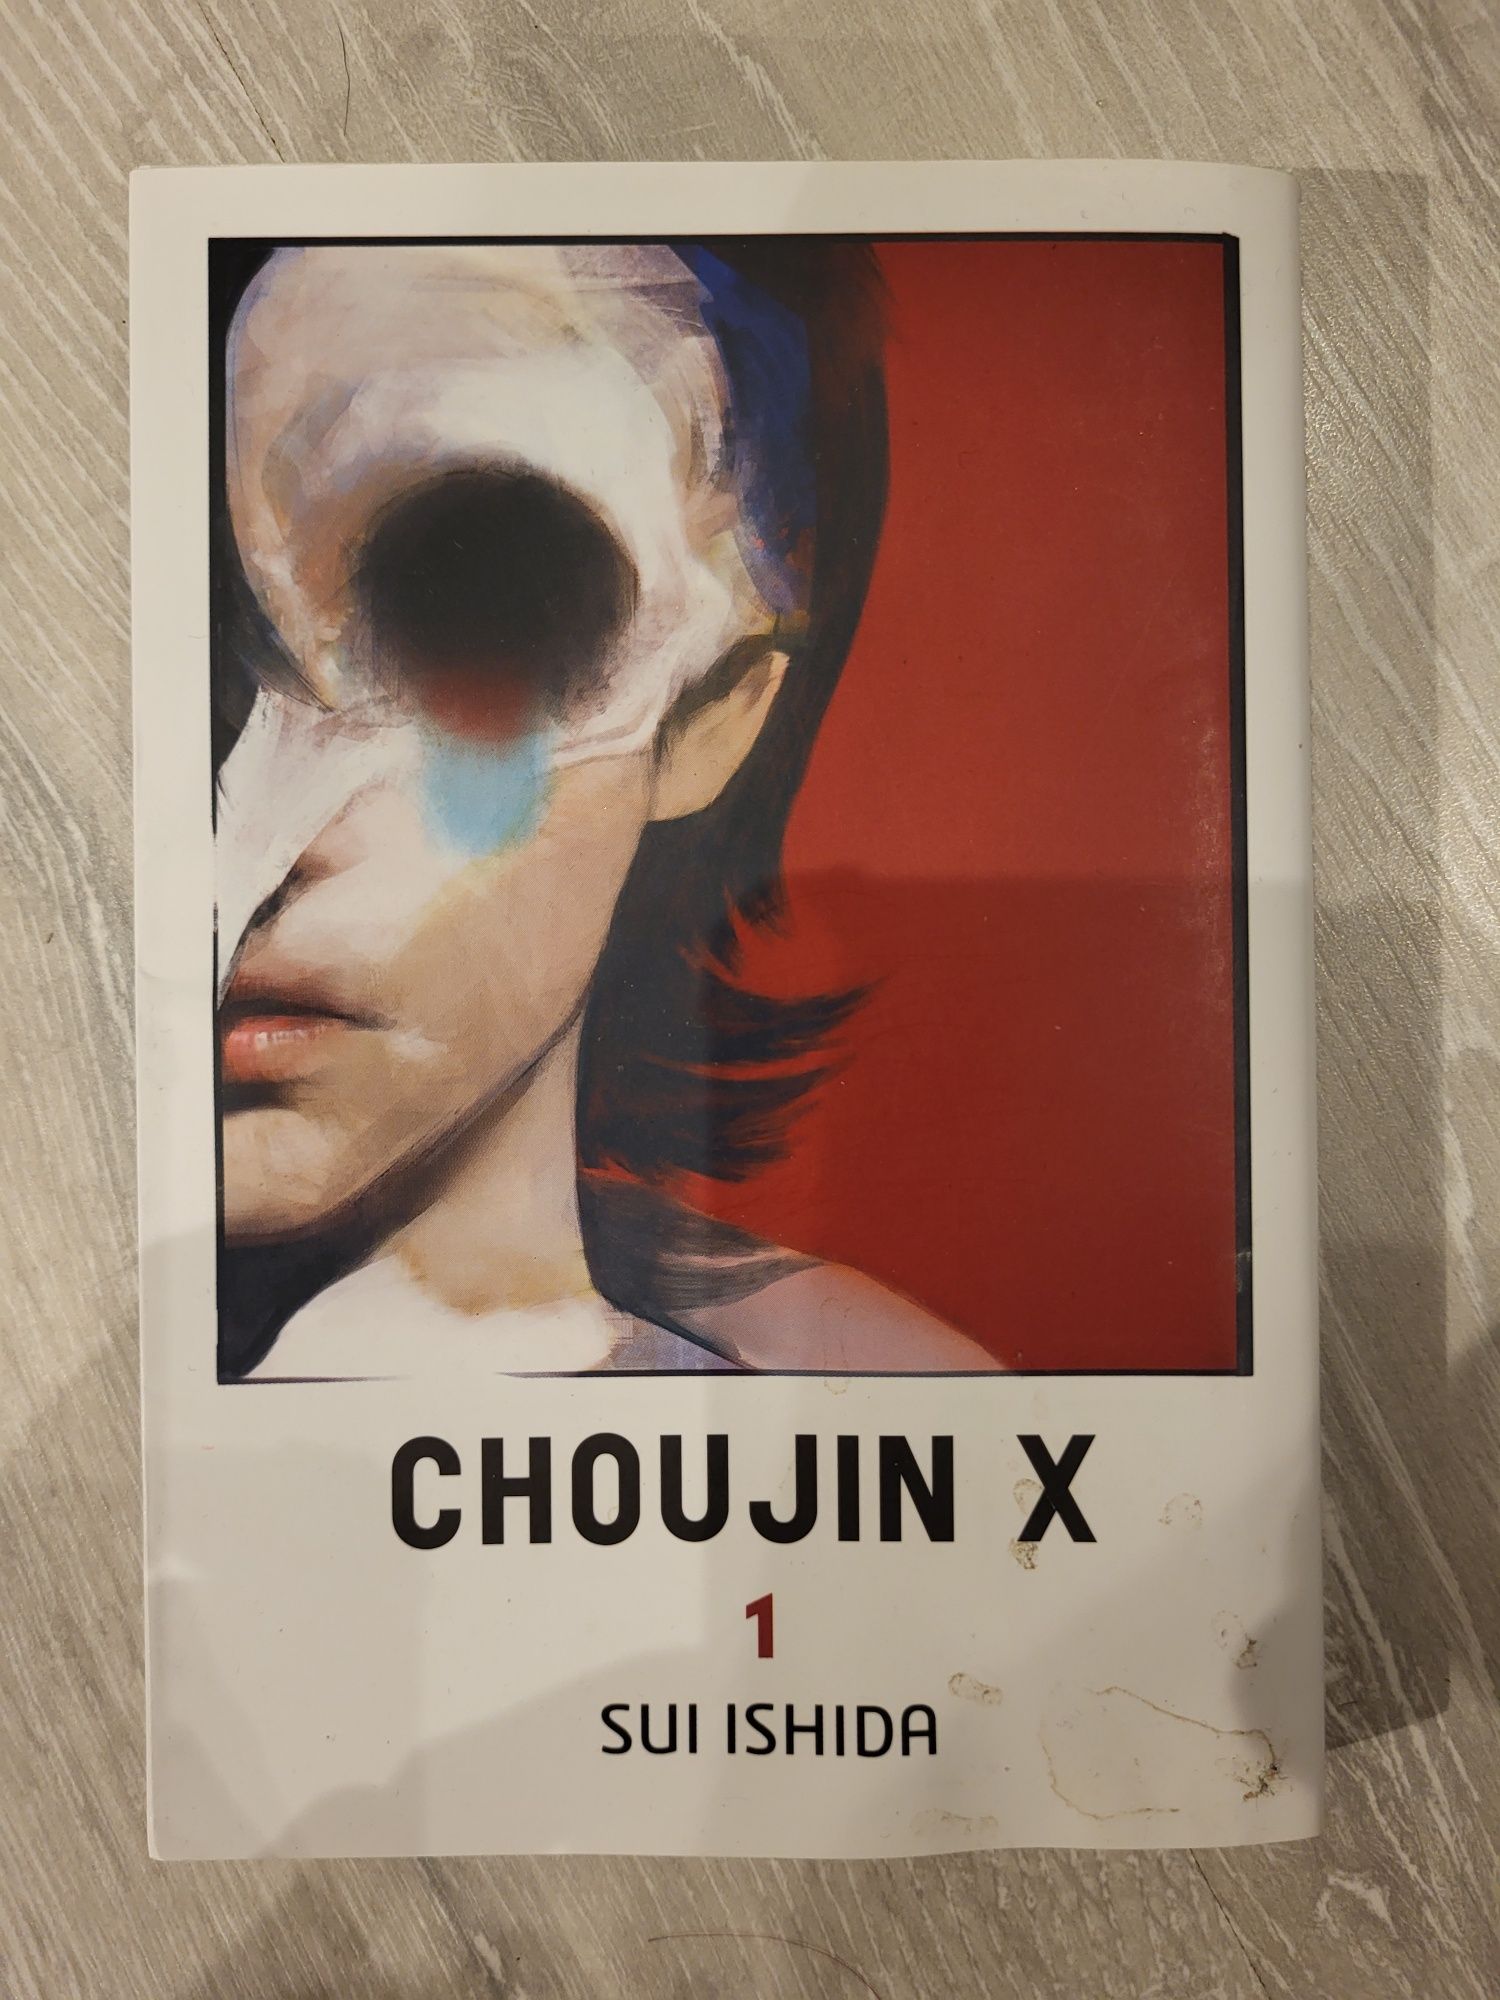 Choujin x manga 1 tom